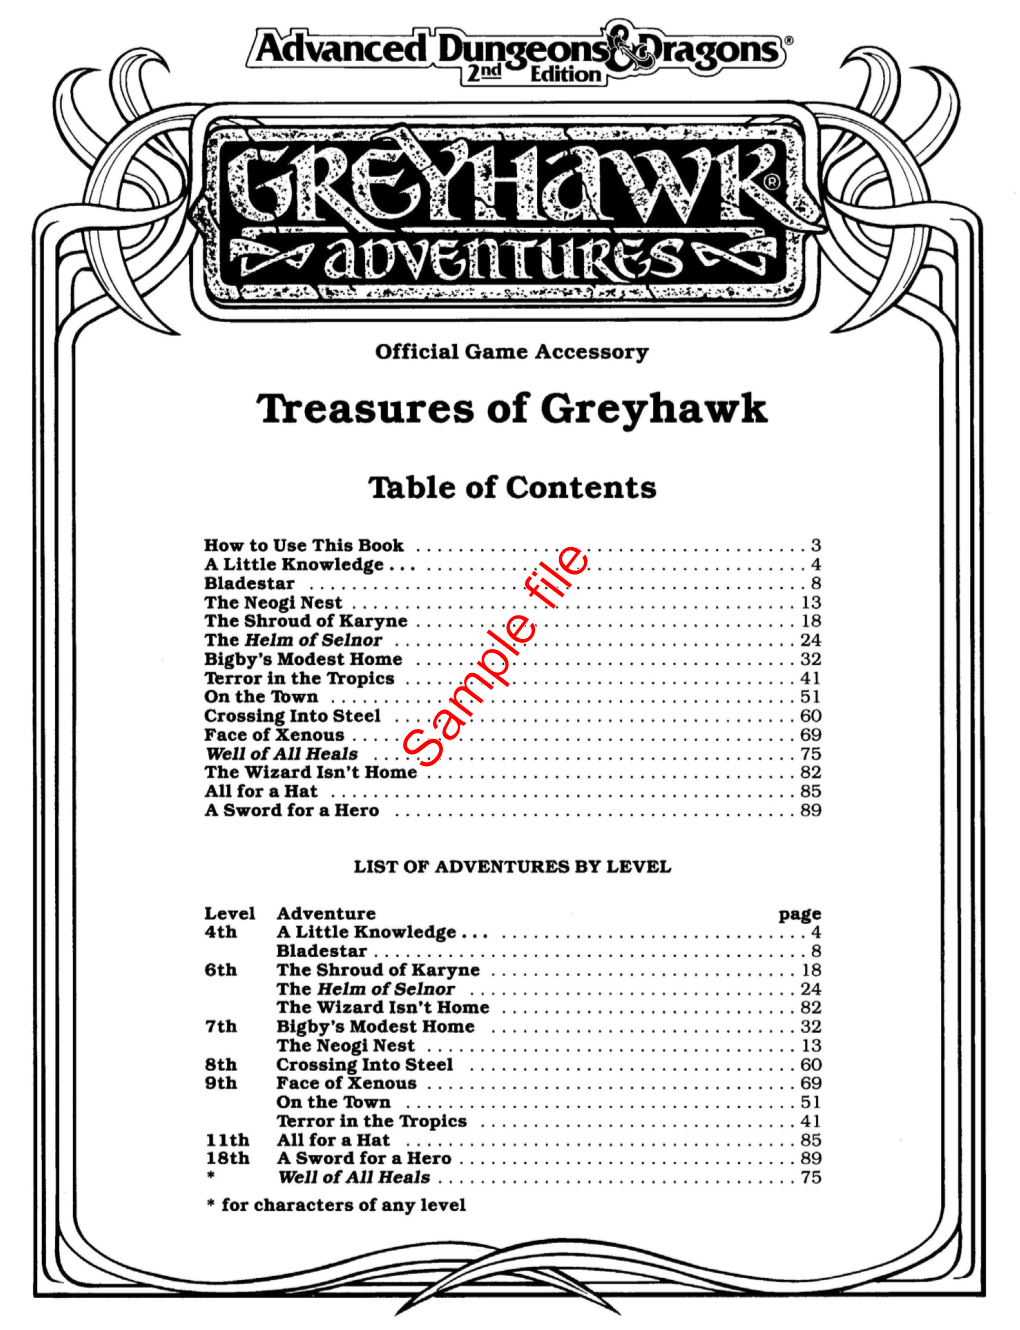 Treasures of Greyhawk Table of Contents